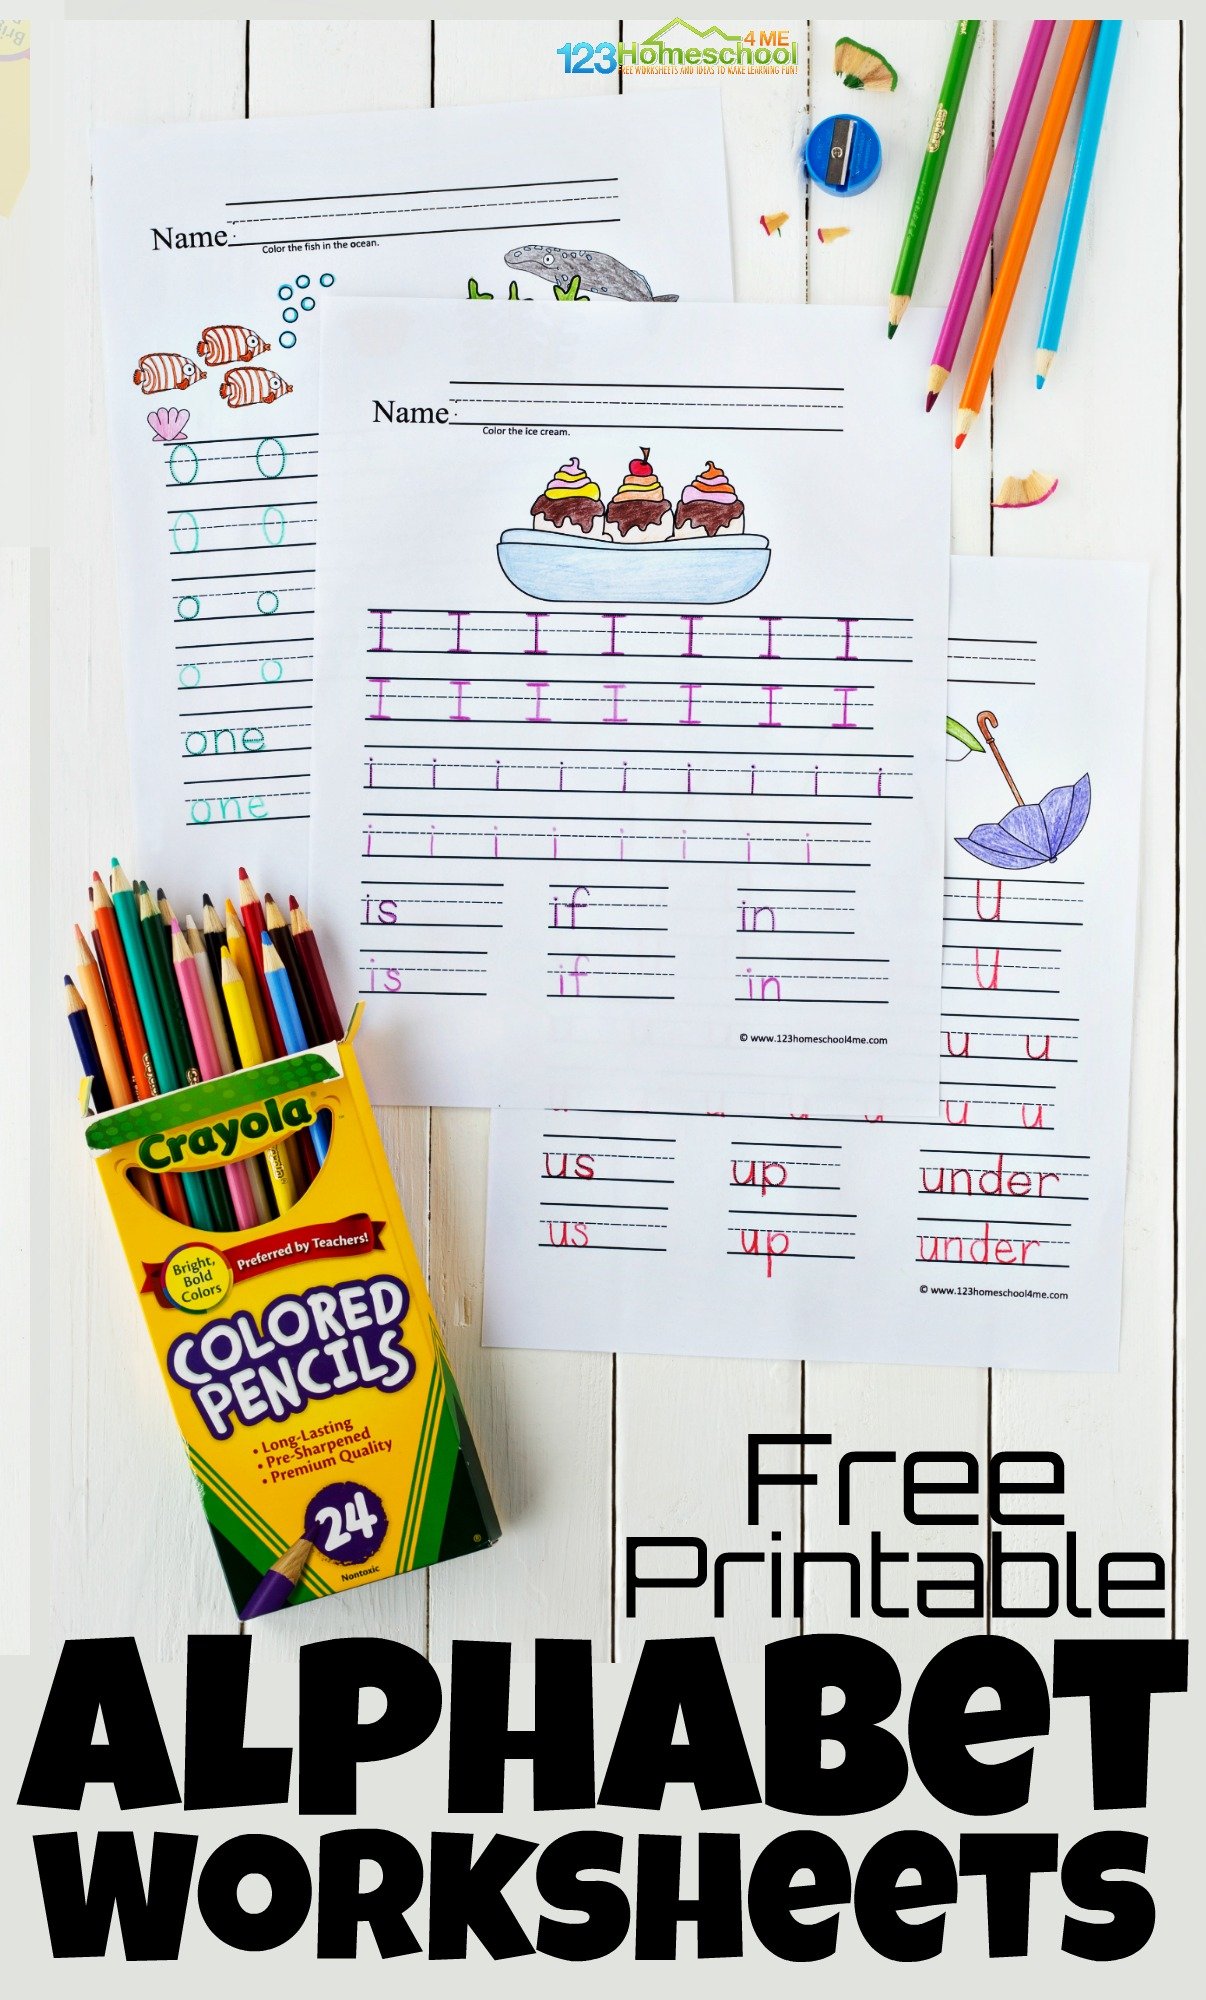 Free Printable Alphabet Worksheets for Kids